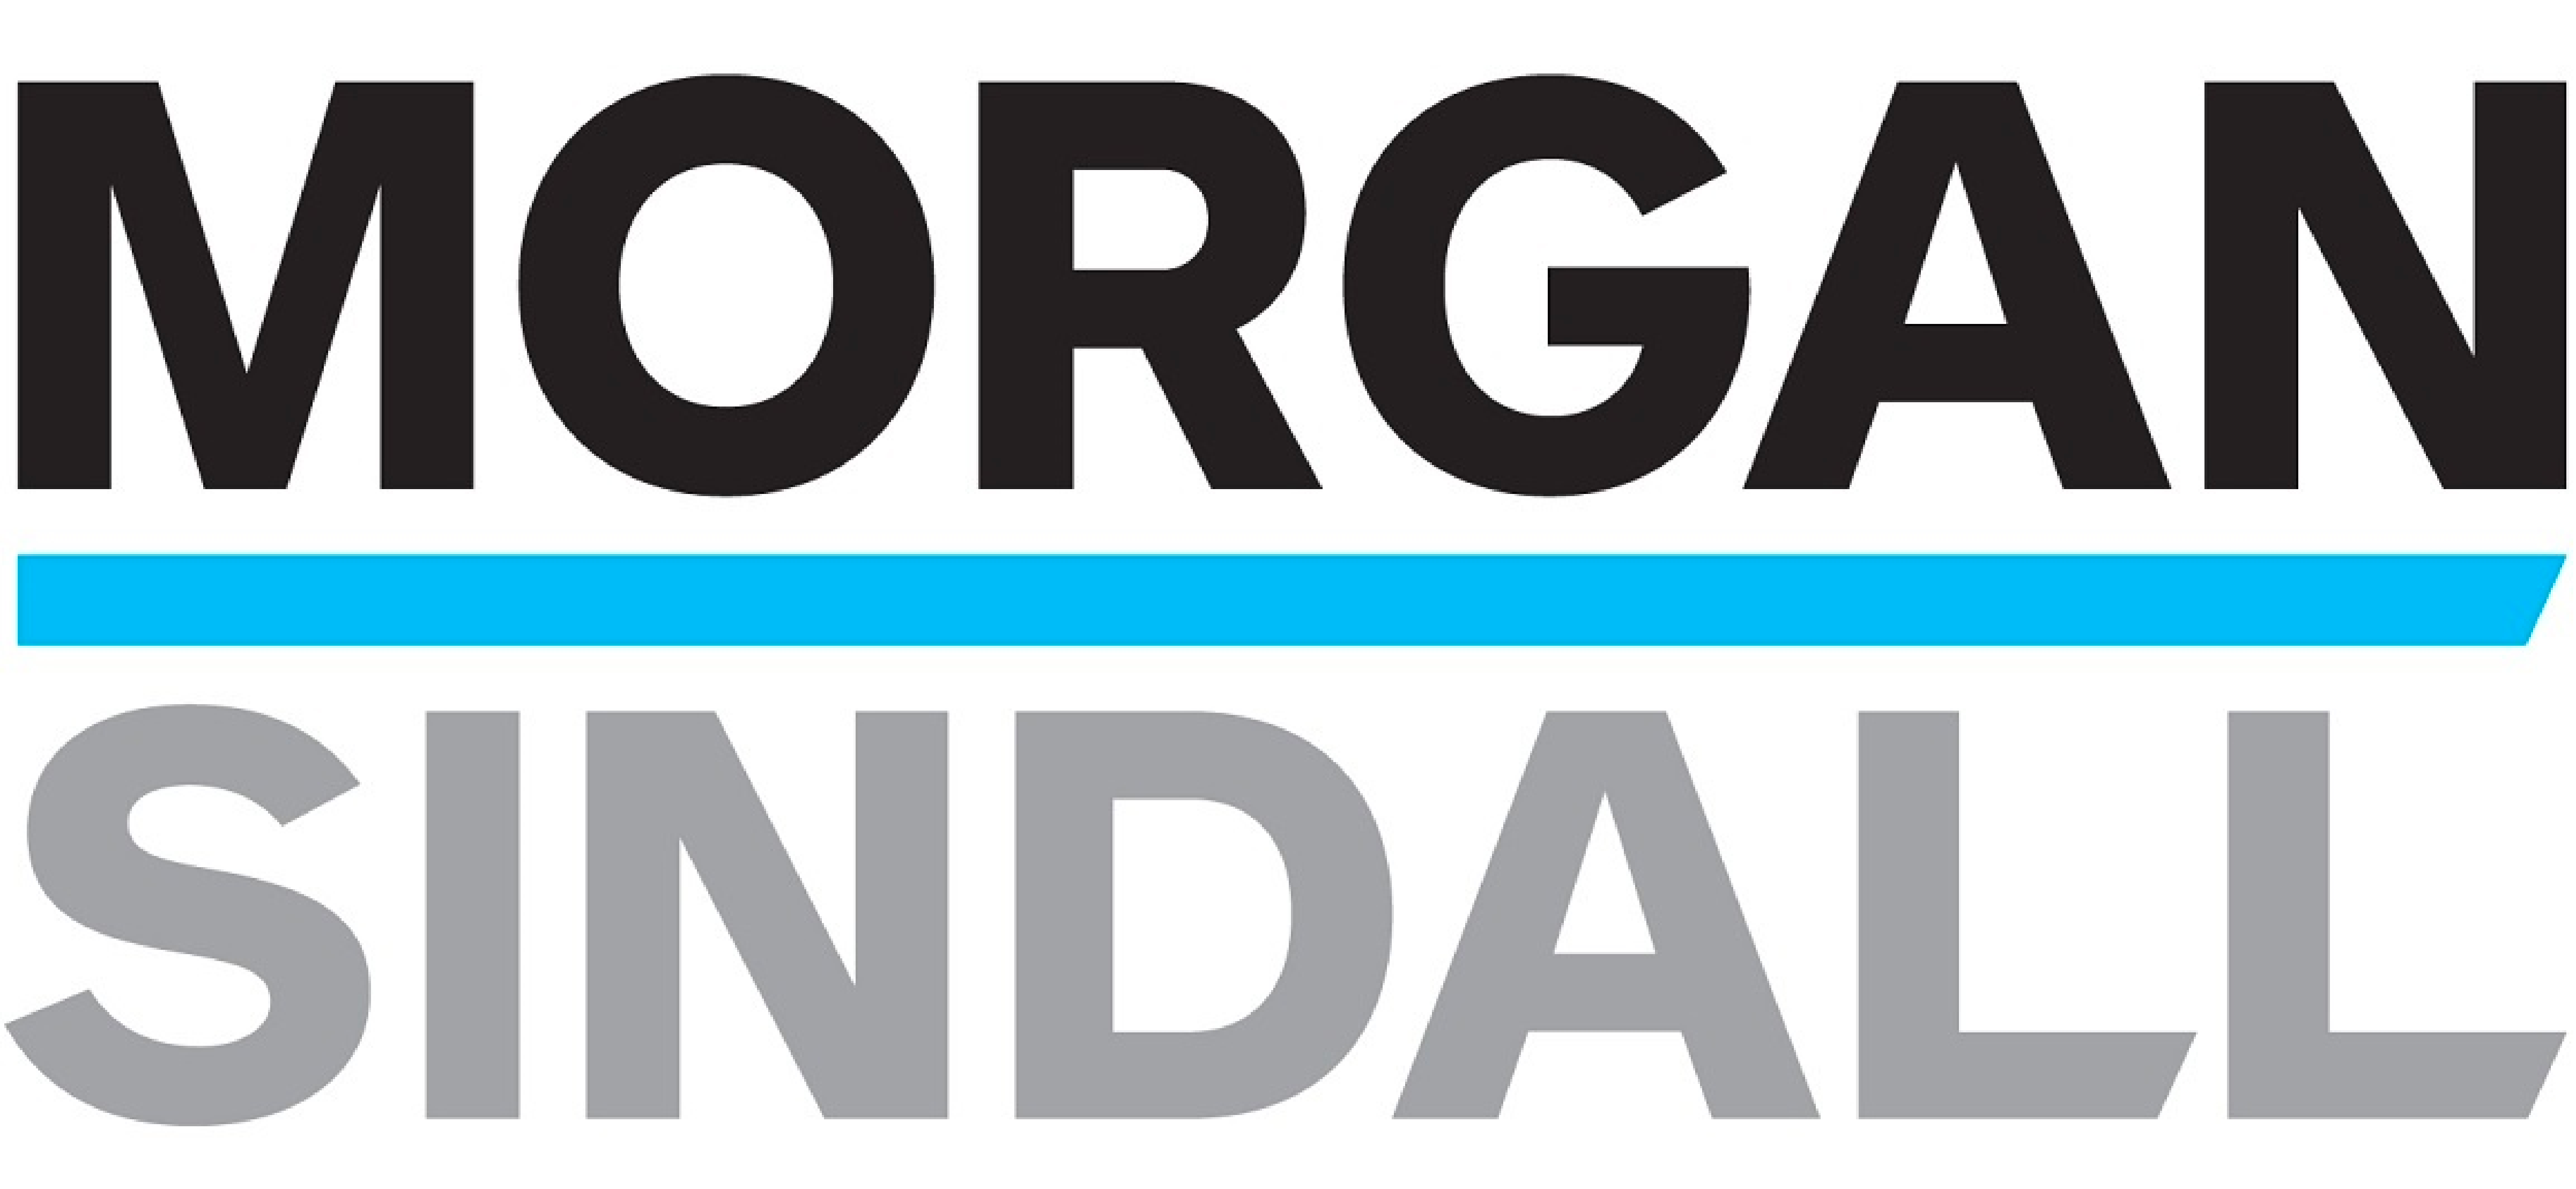 Morgan-Sindall-logo.png